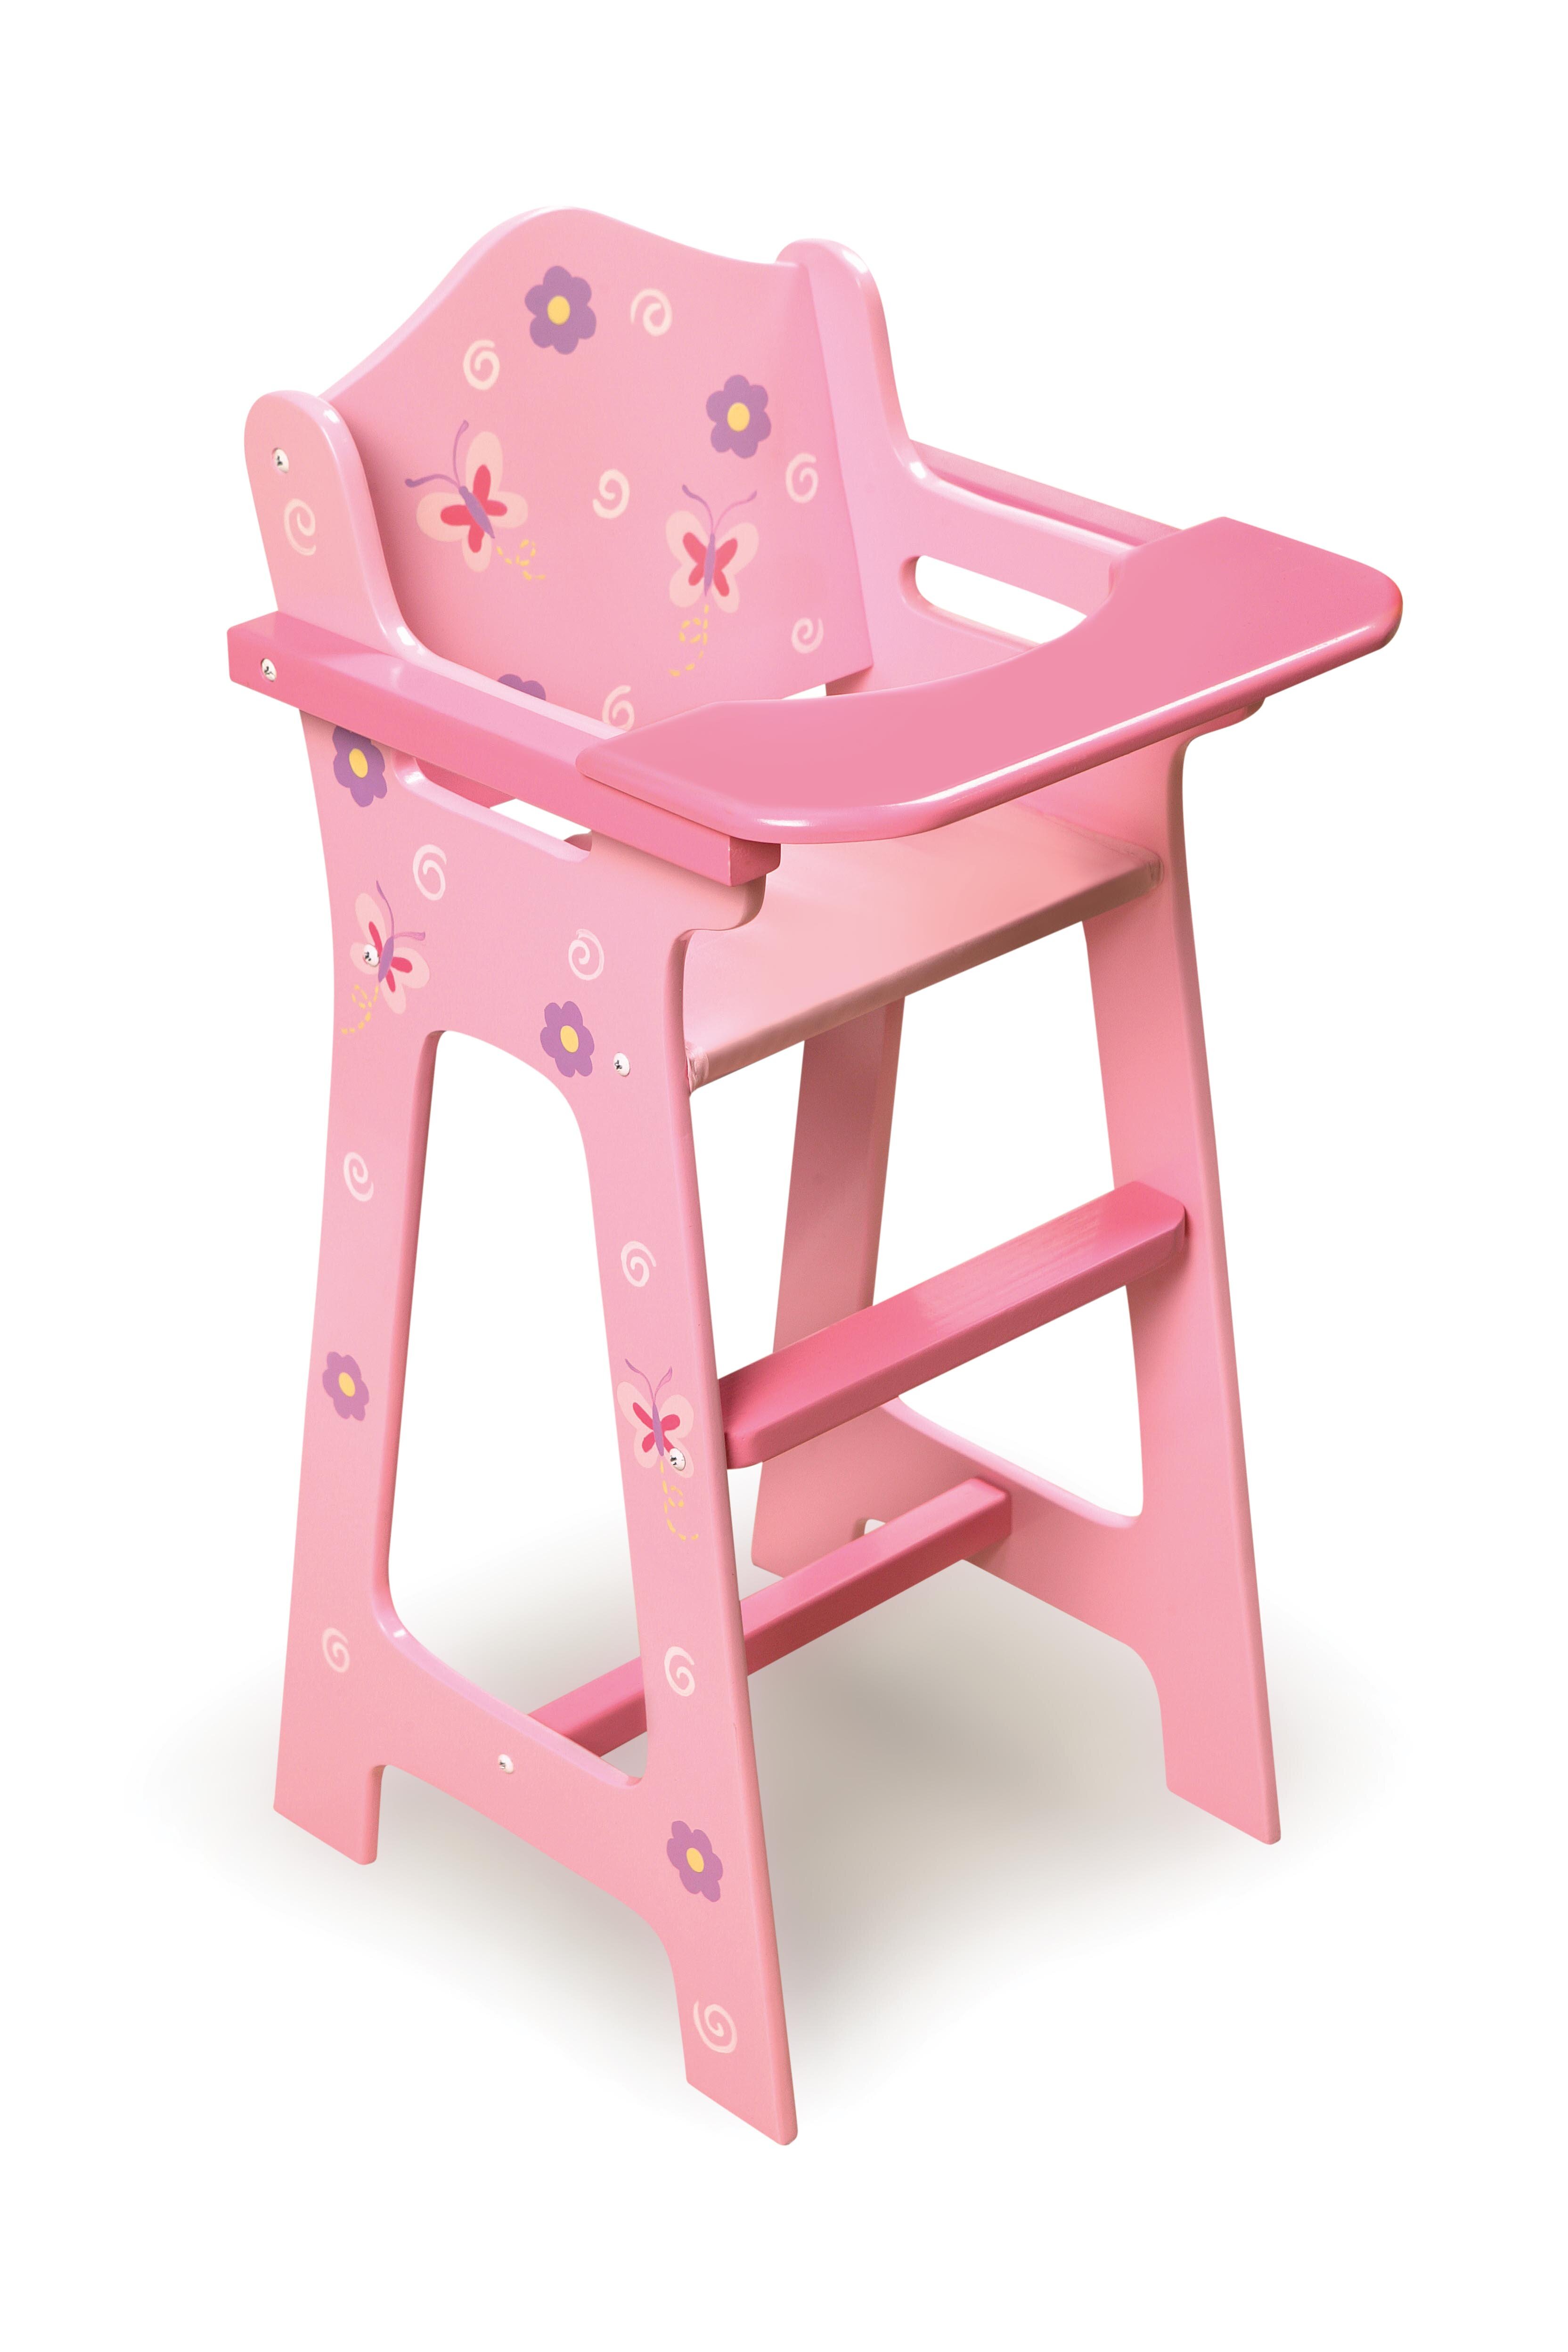 baby high chair doll